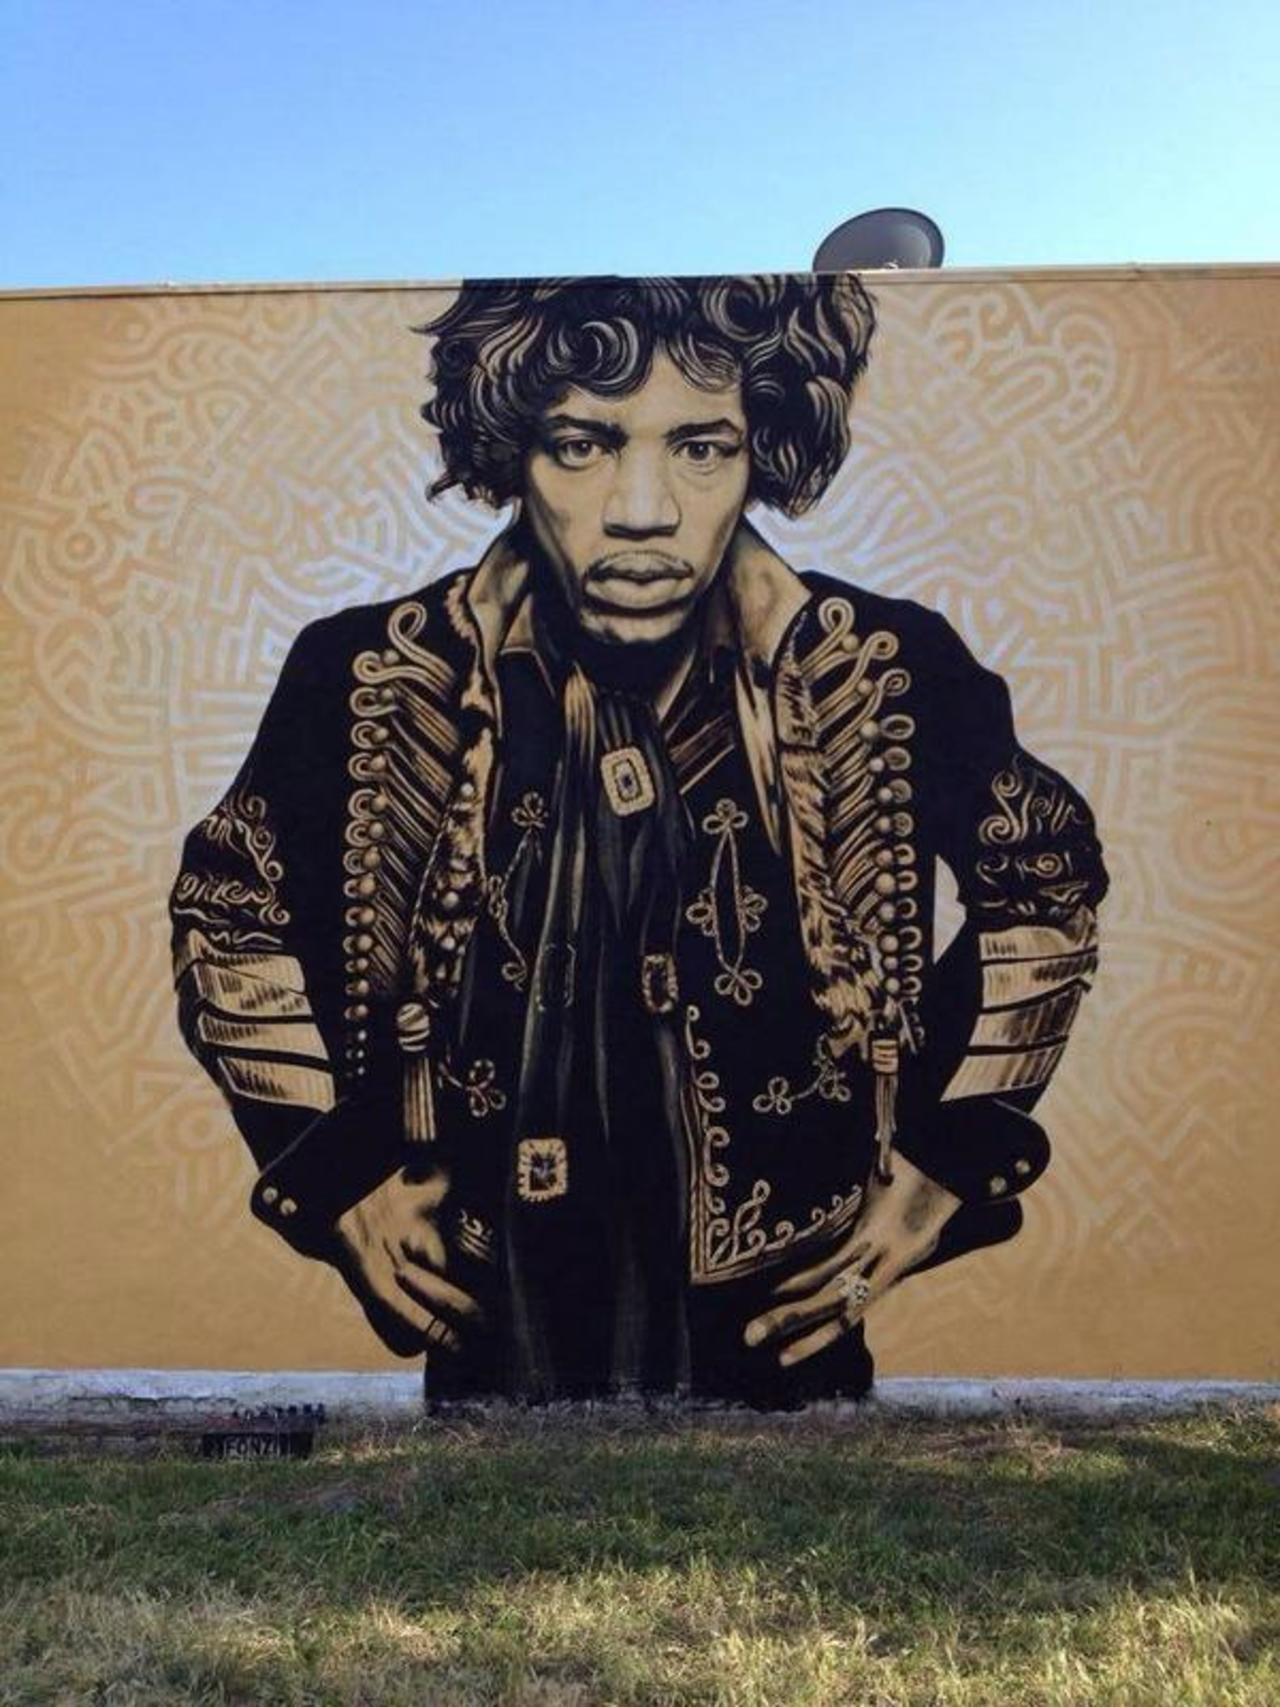 Jimi Hendrix  we love you ! 

Artist Levi Fonz Ponce realistic Street in Hollywood
#art #graffiti #mural #streetart http://t.co/hNon4etonw